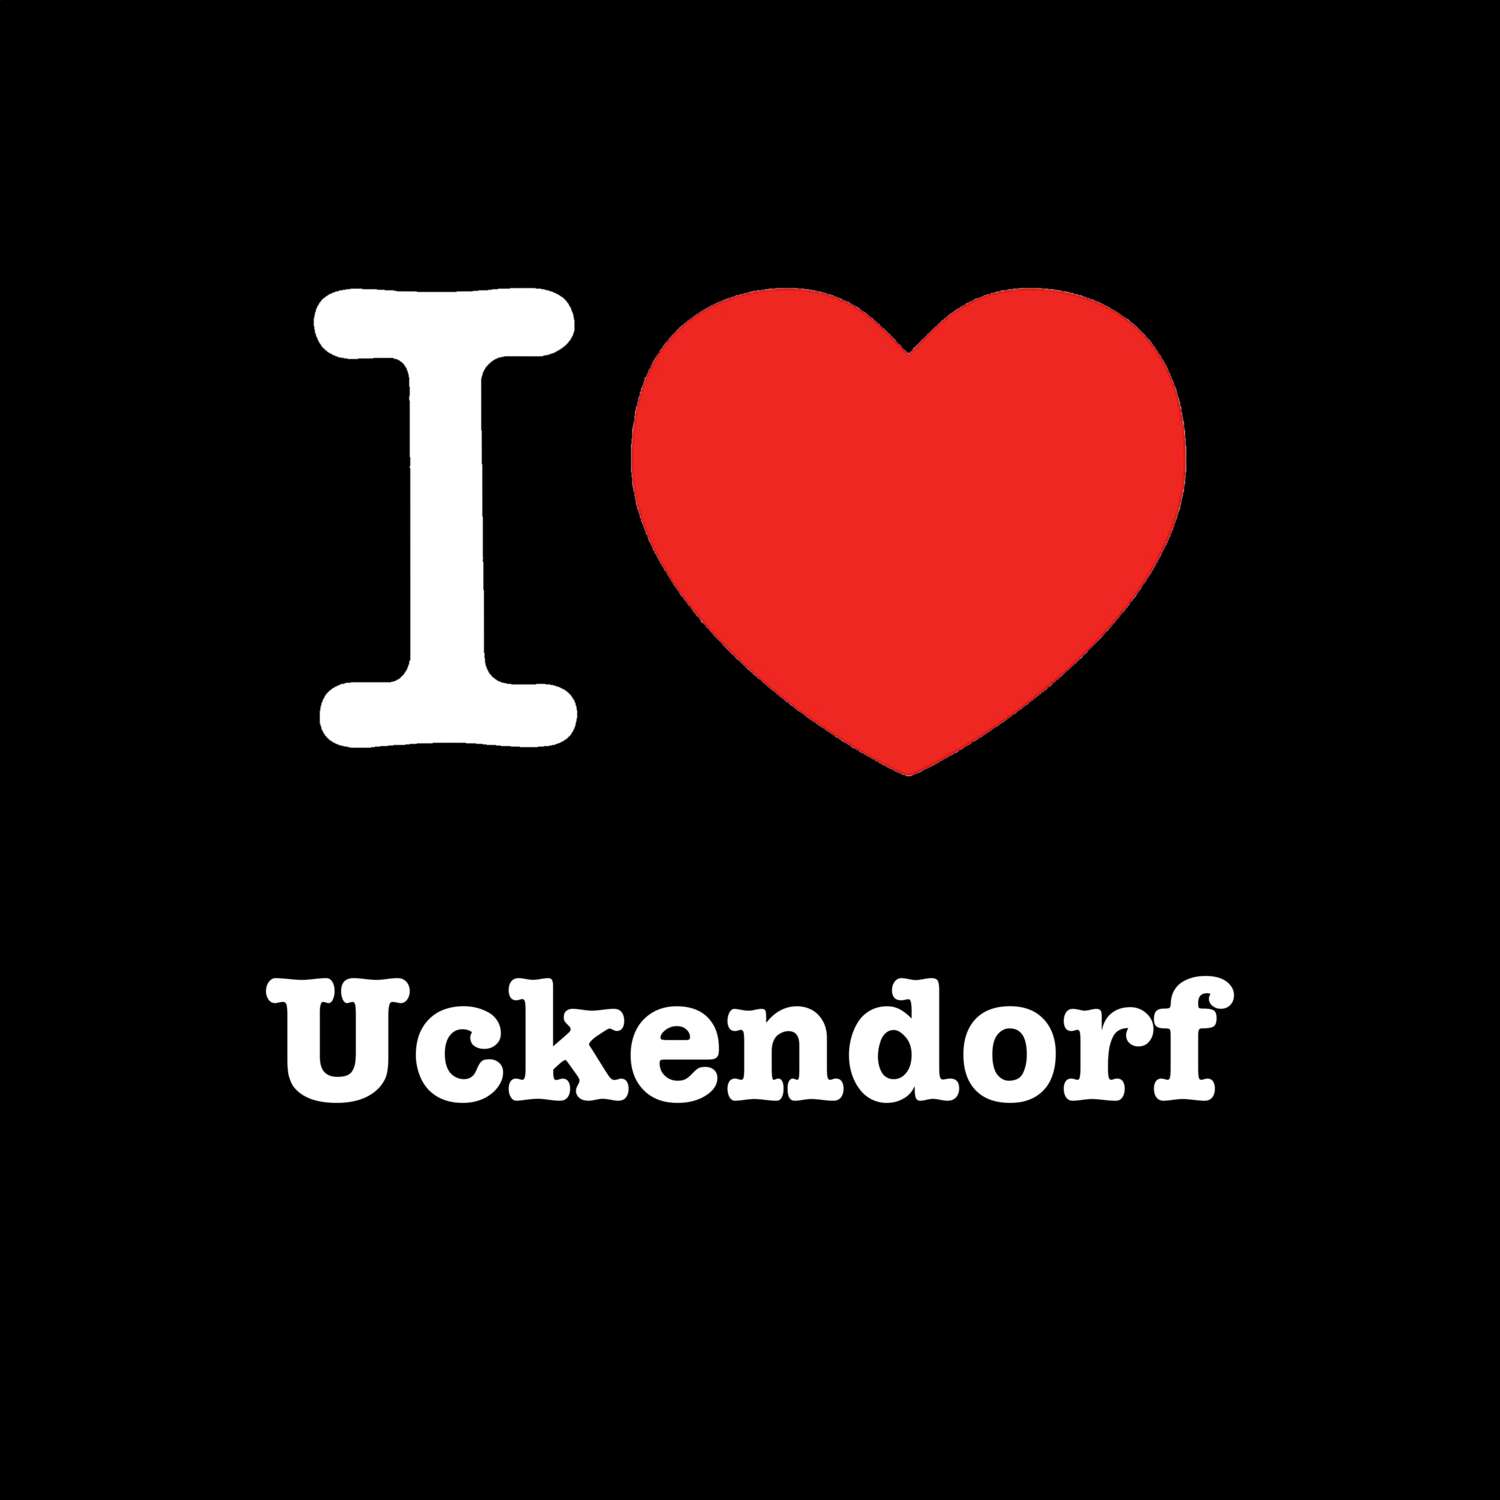 Uckendorf T-Shirt »I love«